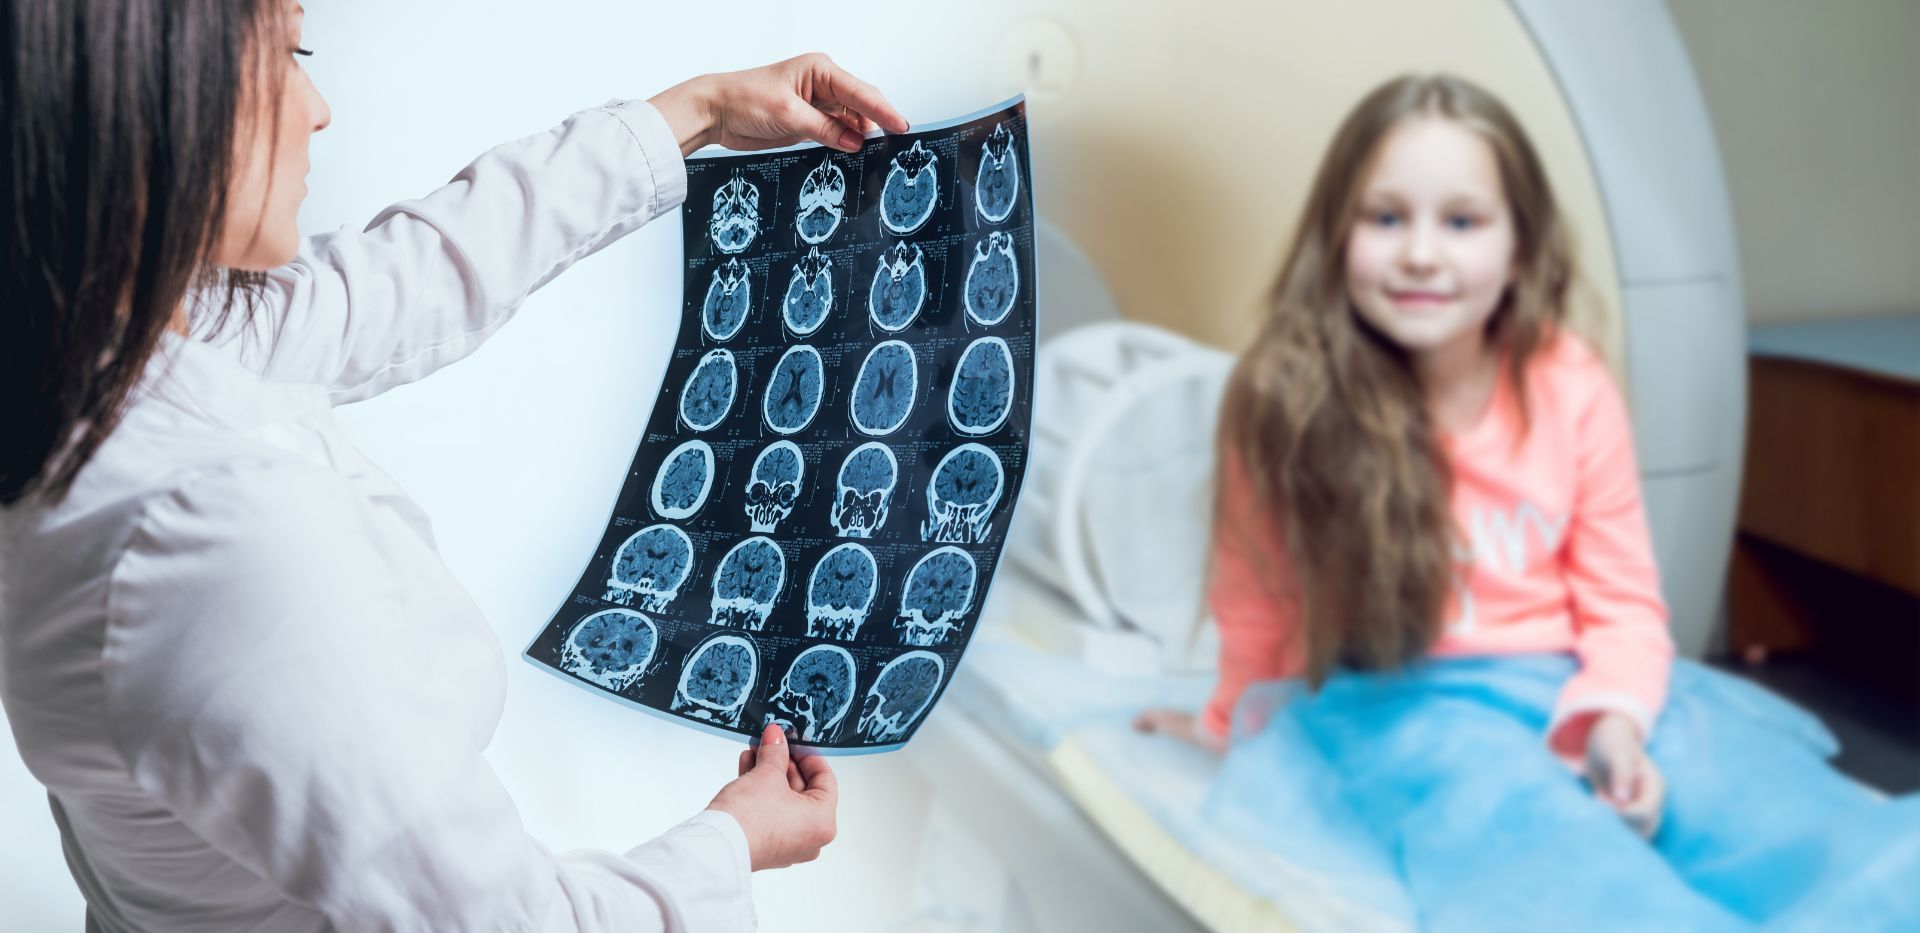 Can children have an MRI scan?